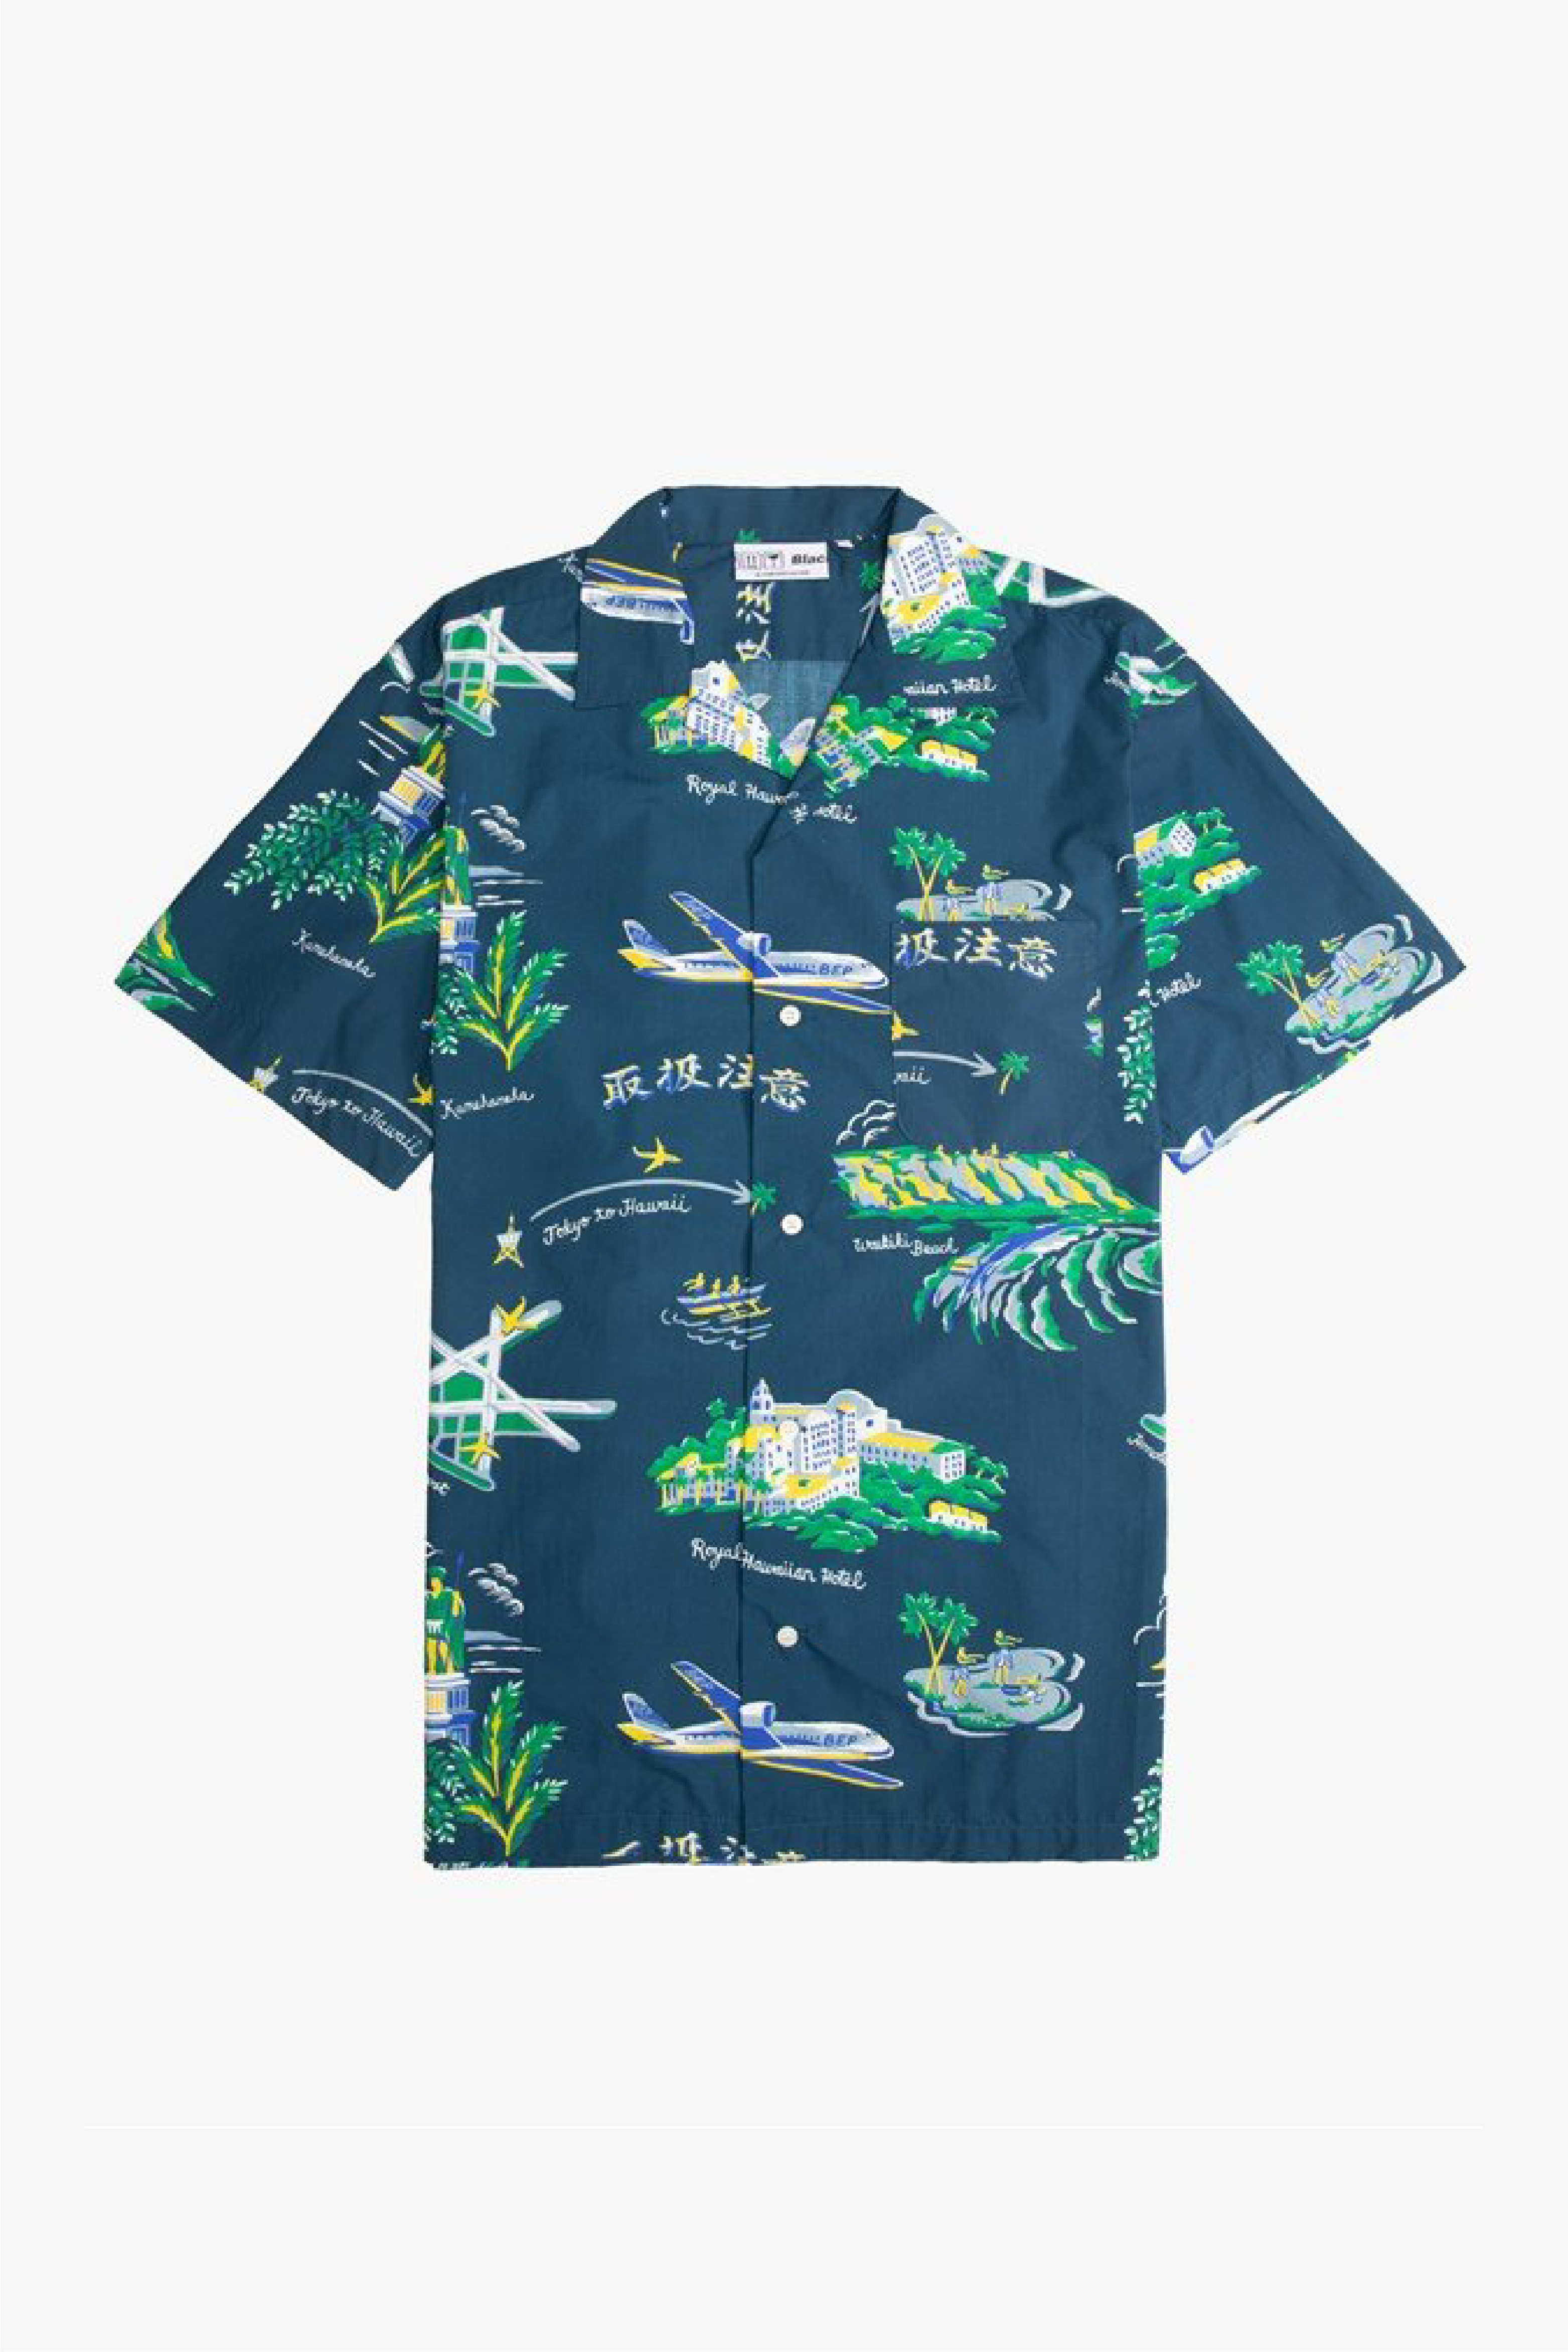 Selectshop FRAME - BLACKEYEPATCH Souvenir Aloha Shirt Shirt Dubai